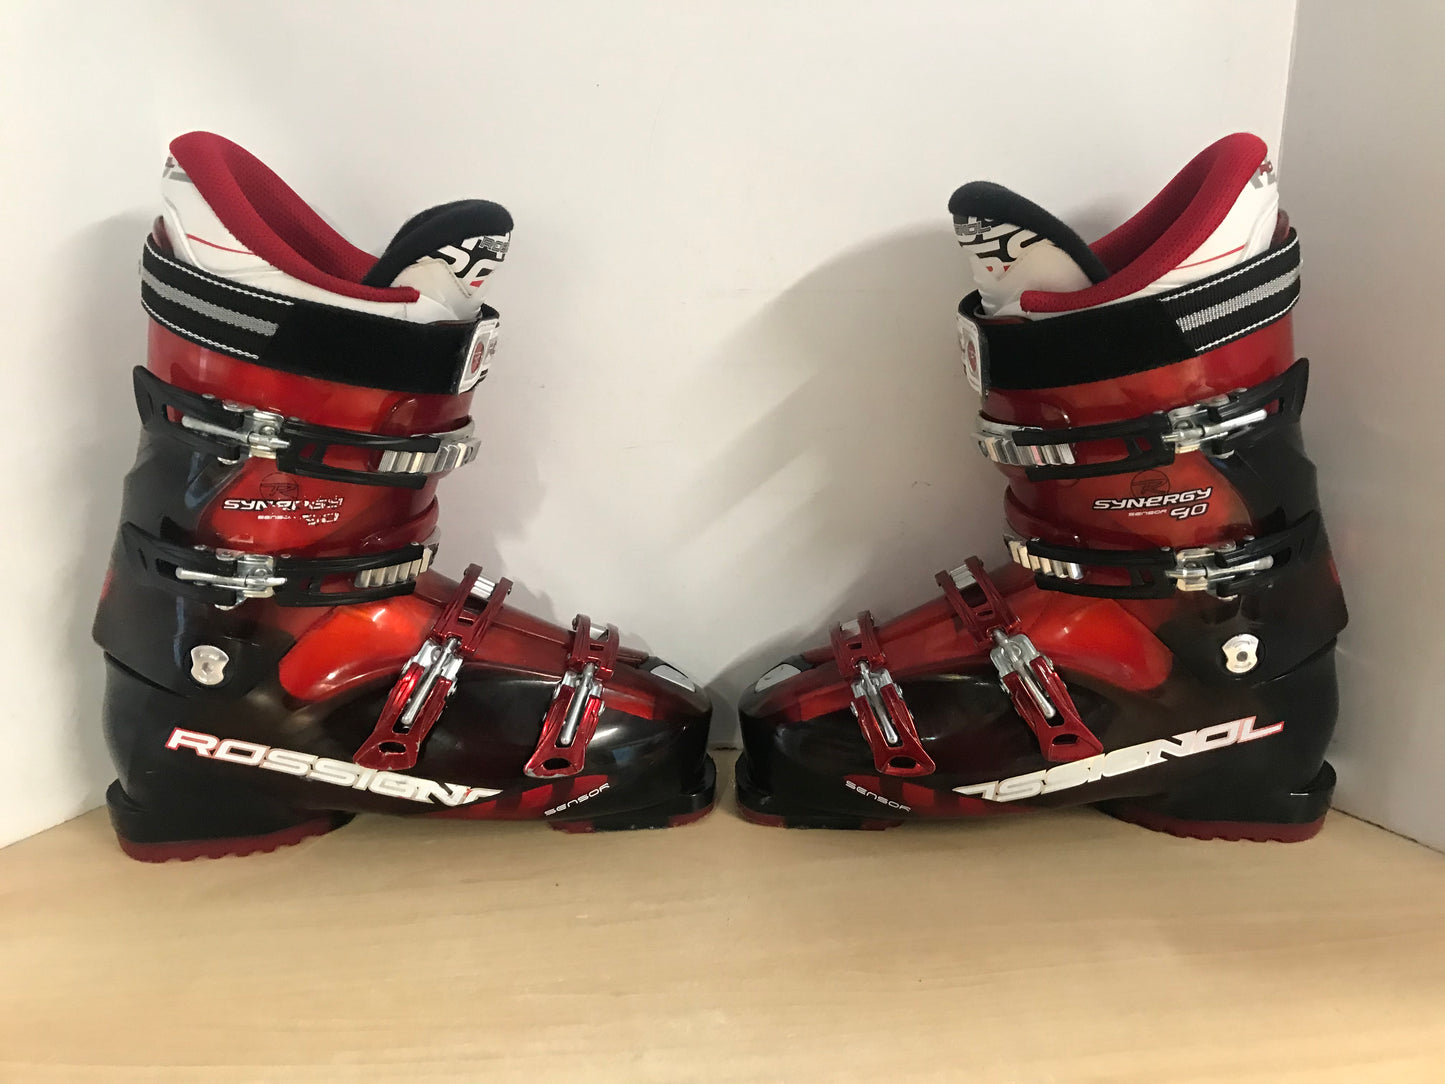 Ski Boots Mondo Size 28.5 Men's Size 10.5 Shoe Size 330 mm Rossignol Sensor Red Black White New Demo Model